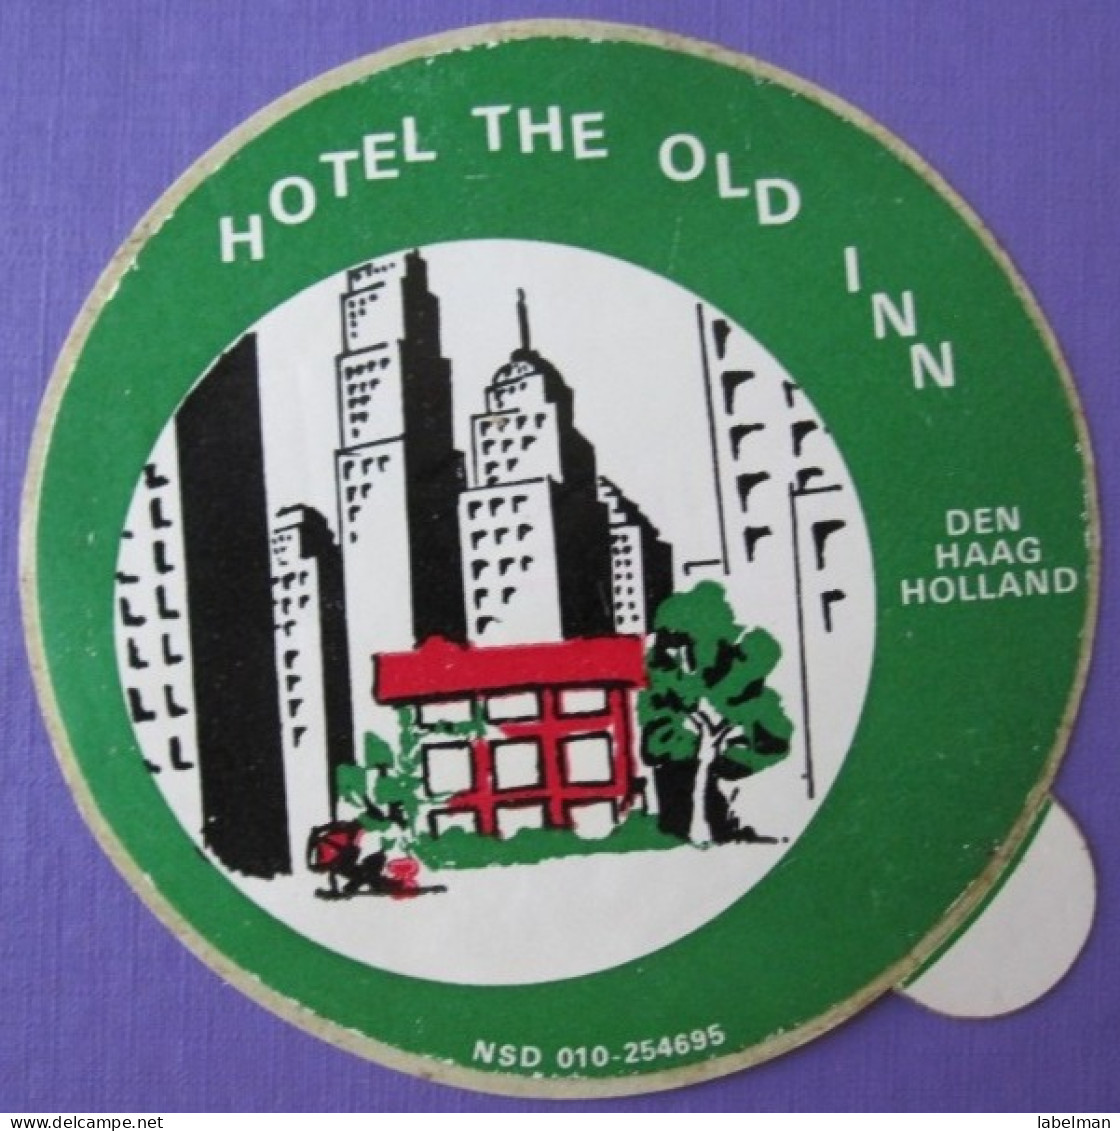 HOTEL MOTEL PENSION OLD INN HAGUE DEN HAAG HOLLAND NETHERLANDS TAG DECAL STICKER LUGGAGE LABEL ETIQUETTE AUFKLEBER - Hotel Labels